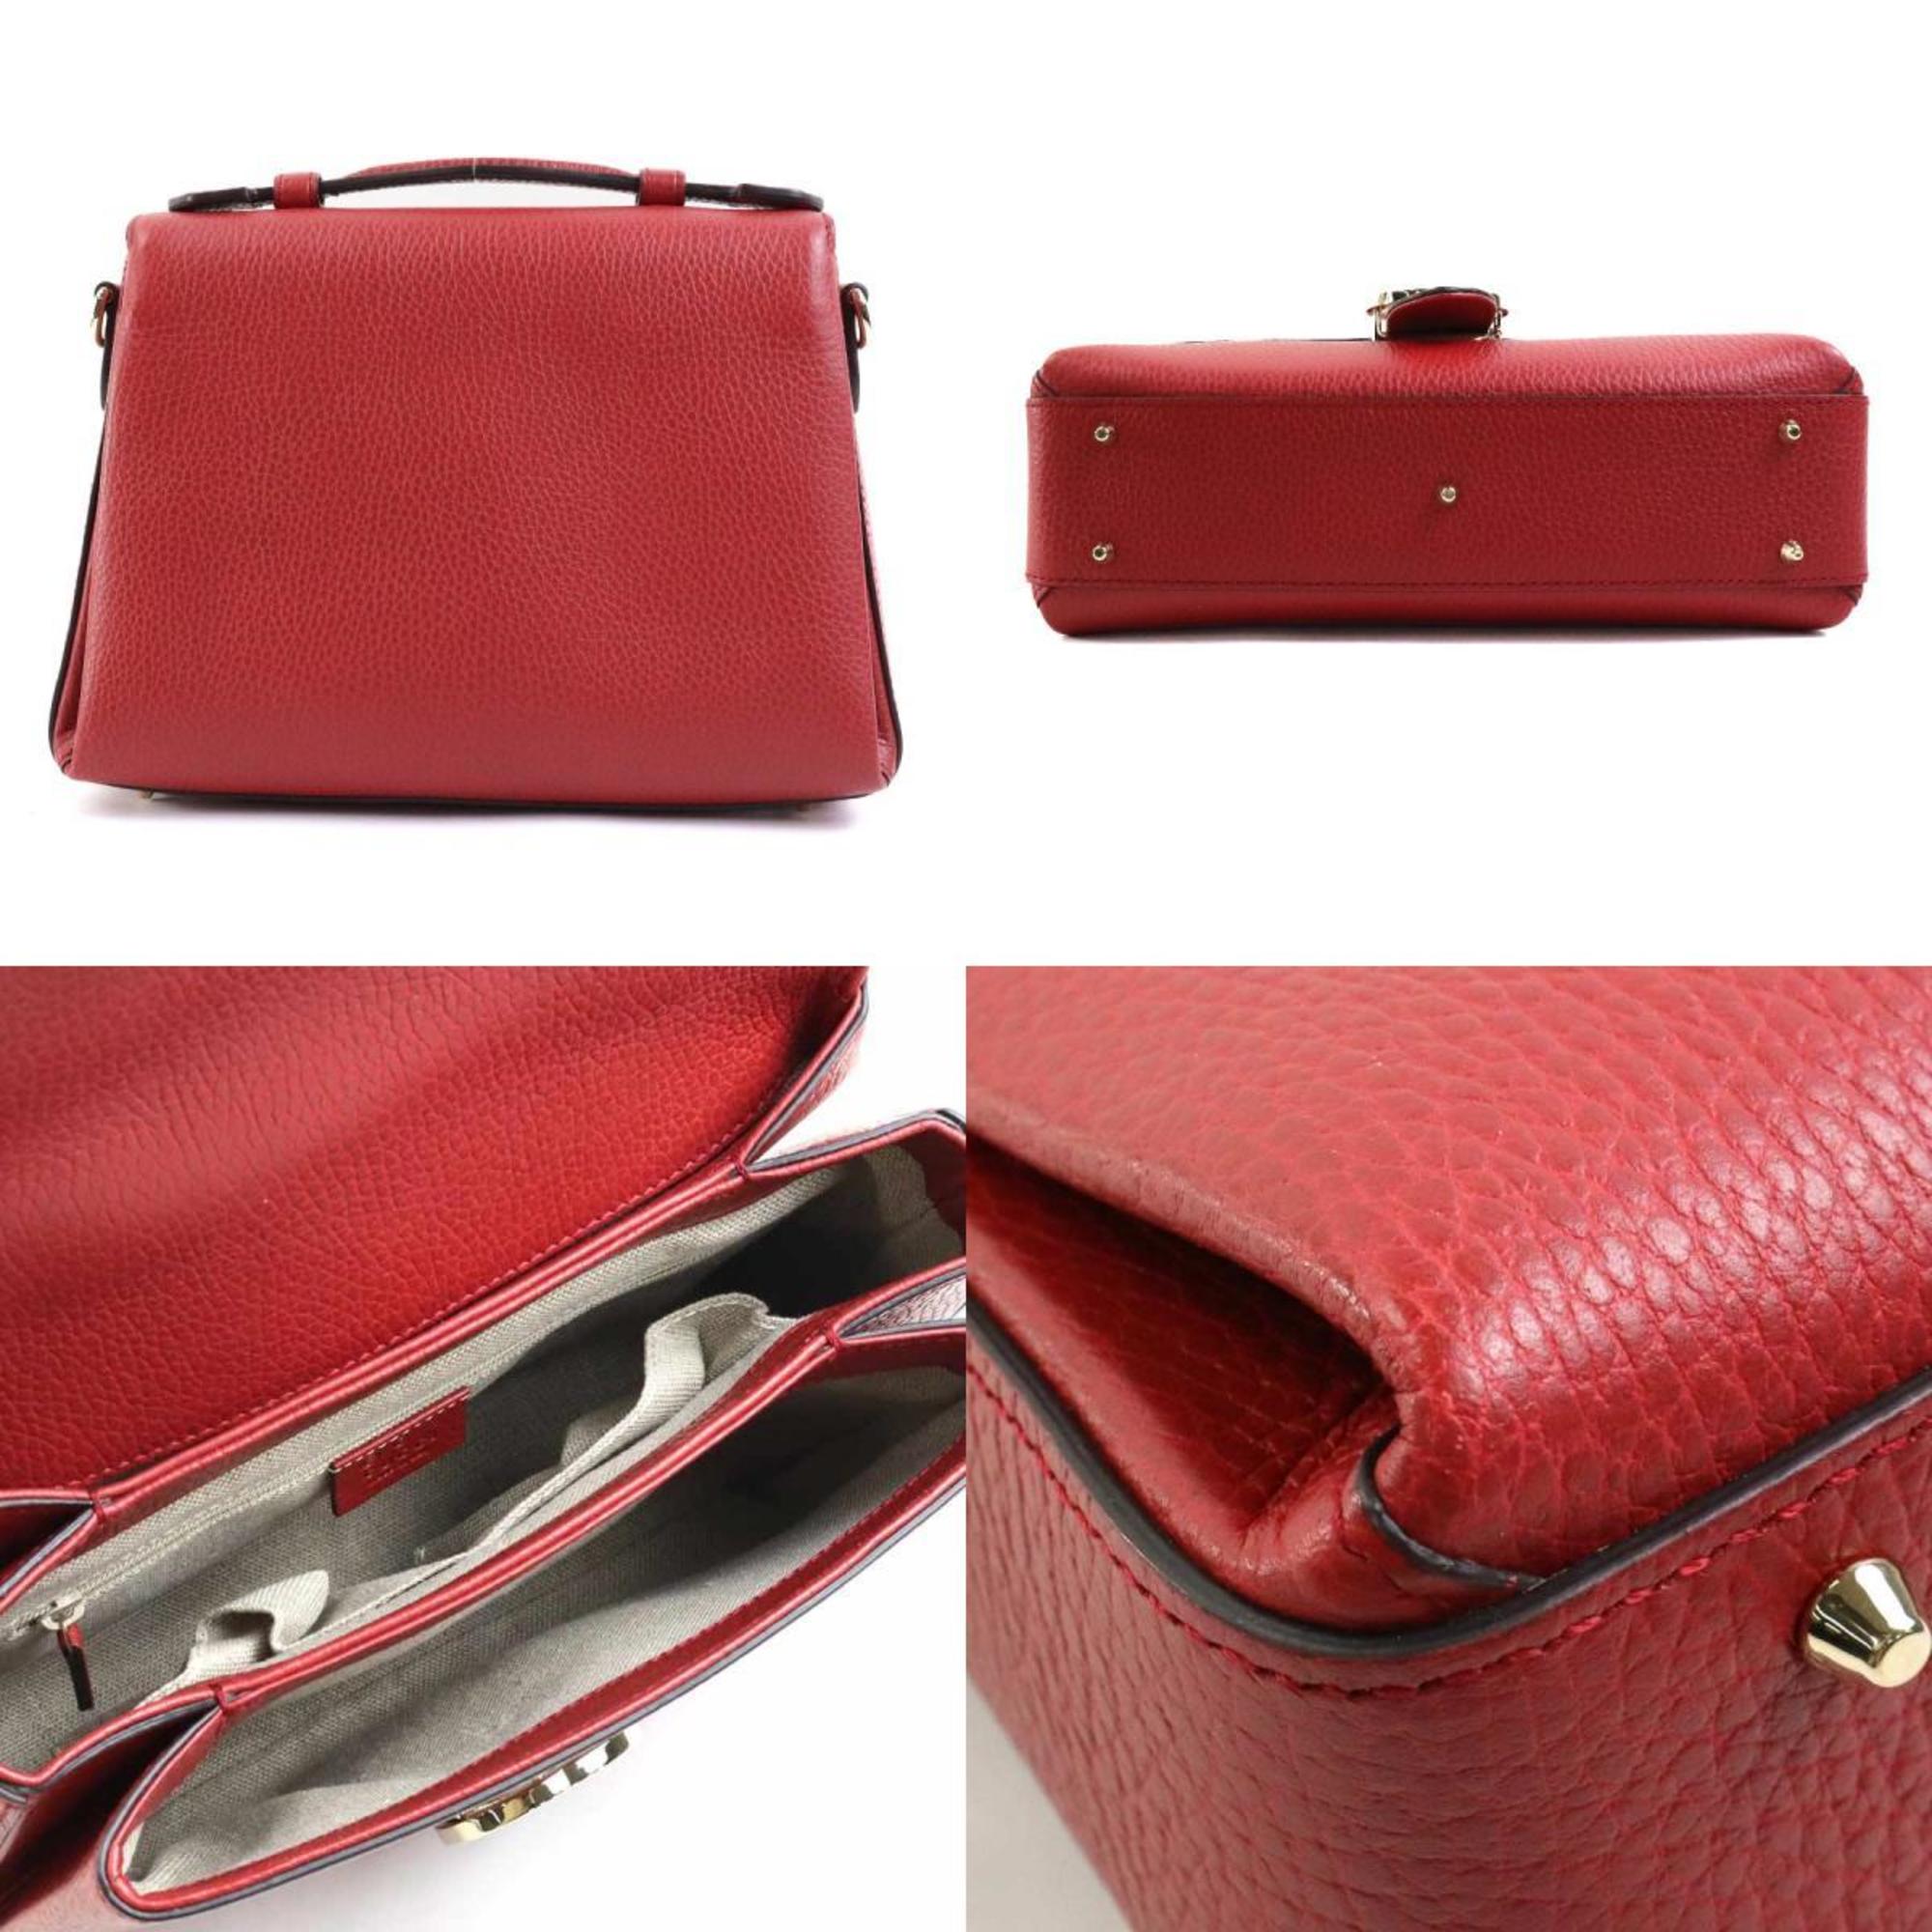 GUCCI Handbag Shoulder Bag Interlocking G Leather/Metal Dark Red/Gold Women's 510302 e58443f